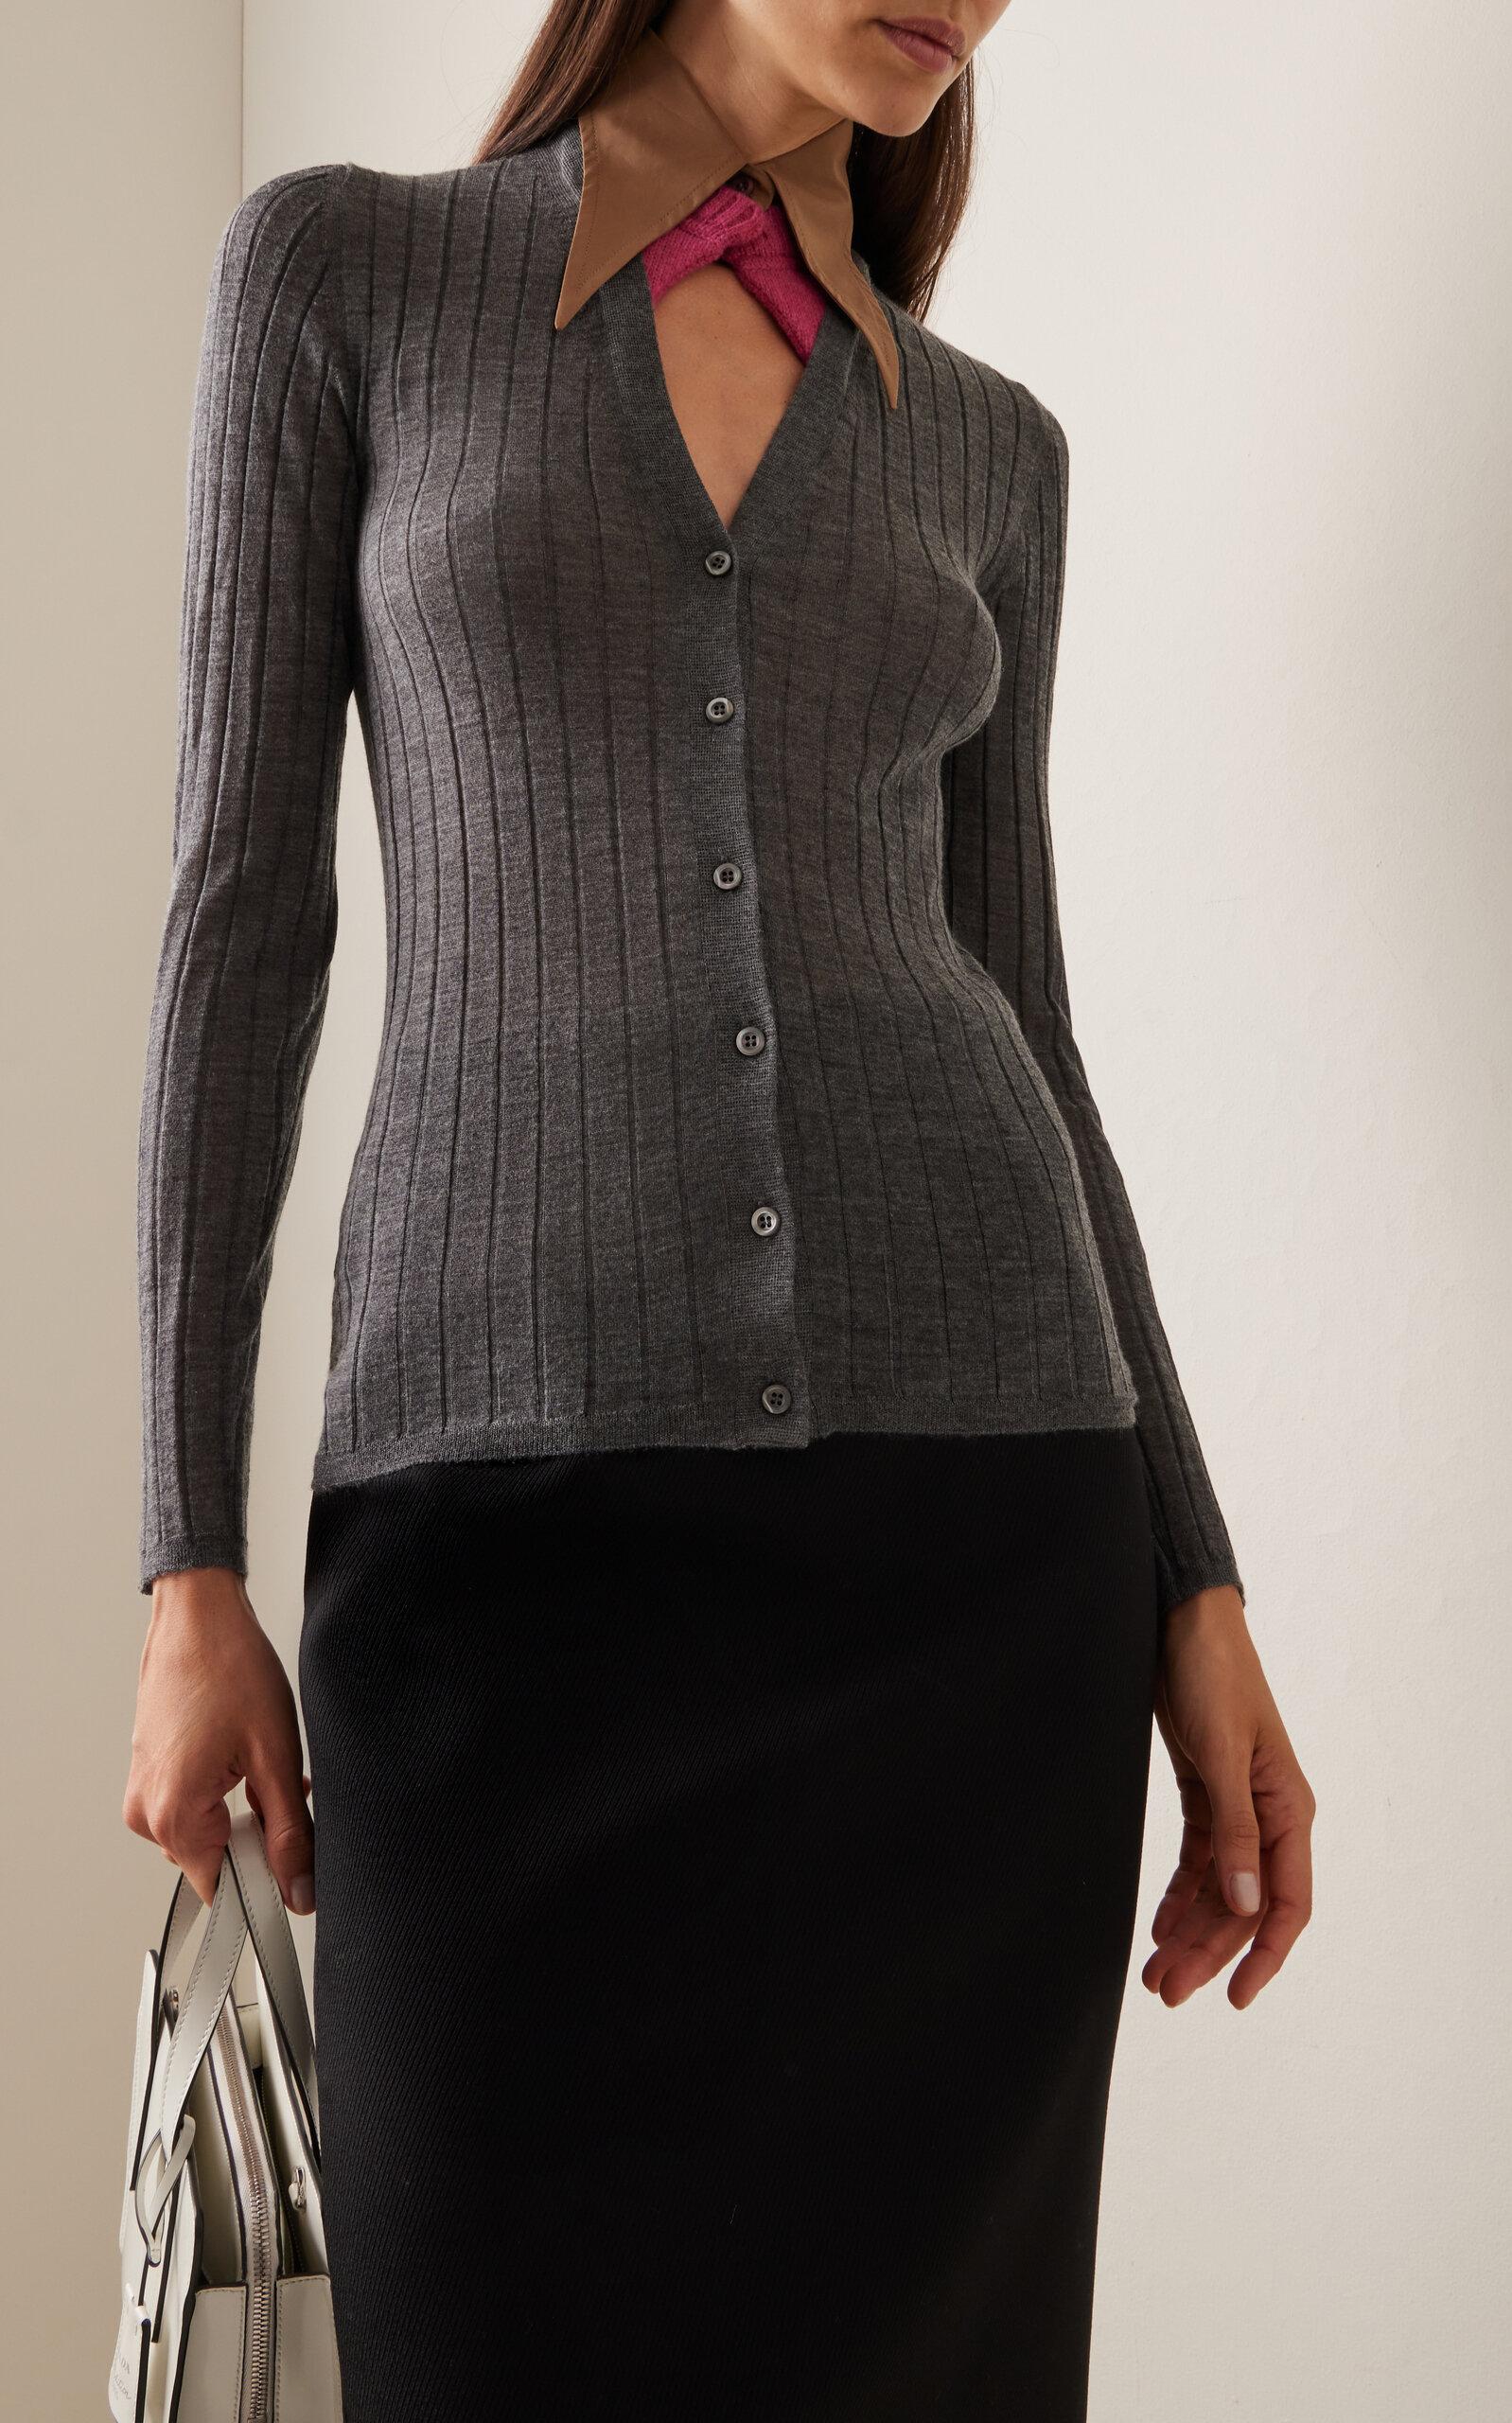 Prada Women's Cashmere and Silk Cardigan with Collar - Grey Multi - Size 4